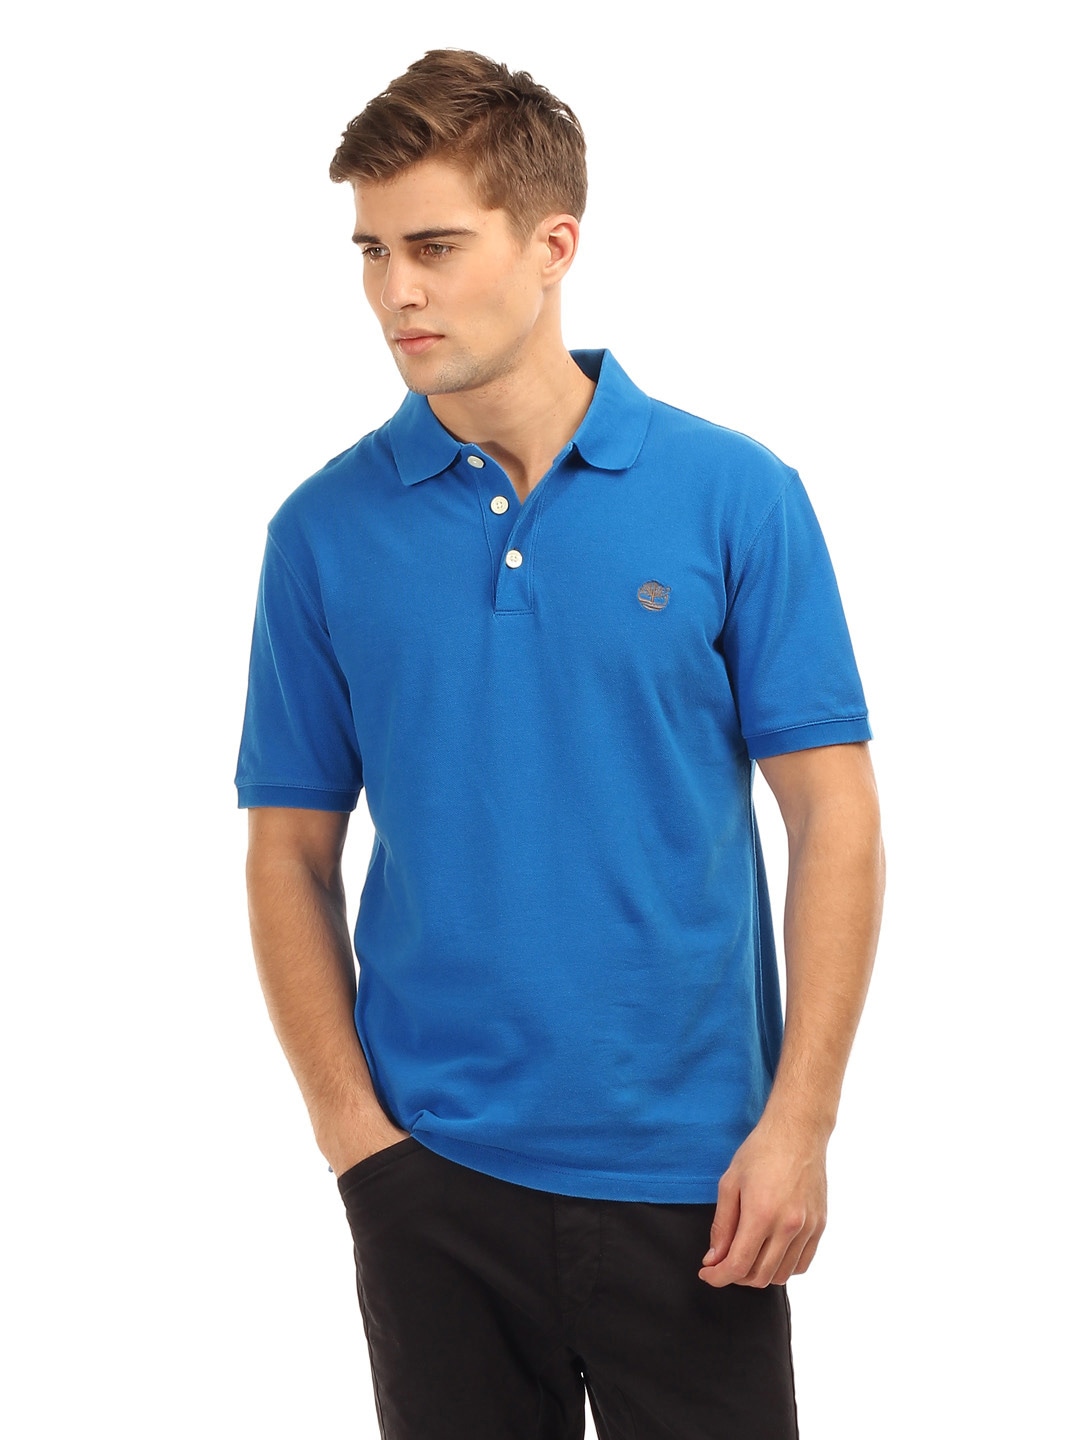 Timberland Men's Pique Polo Blue T-shirt